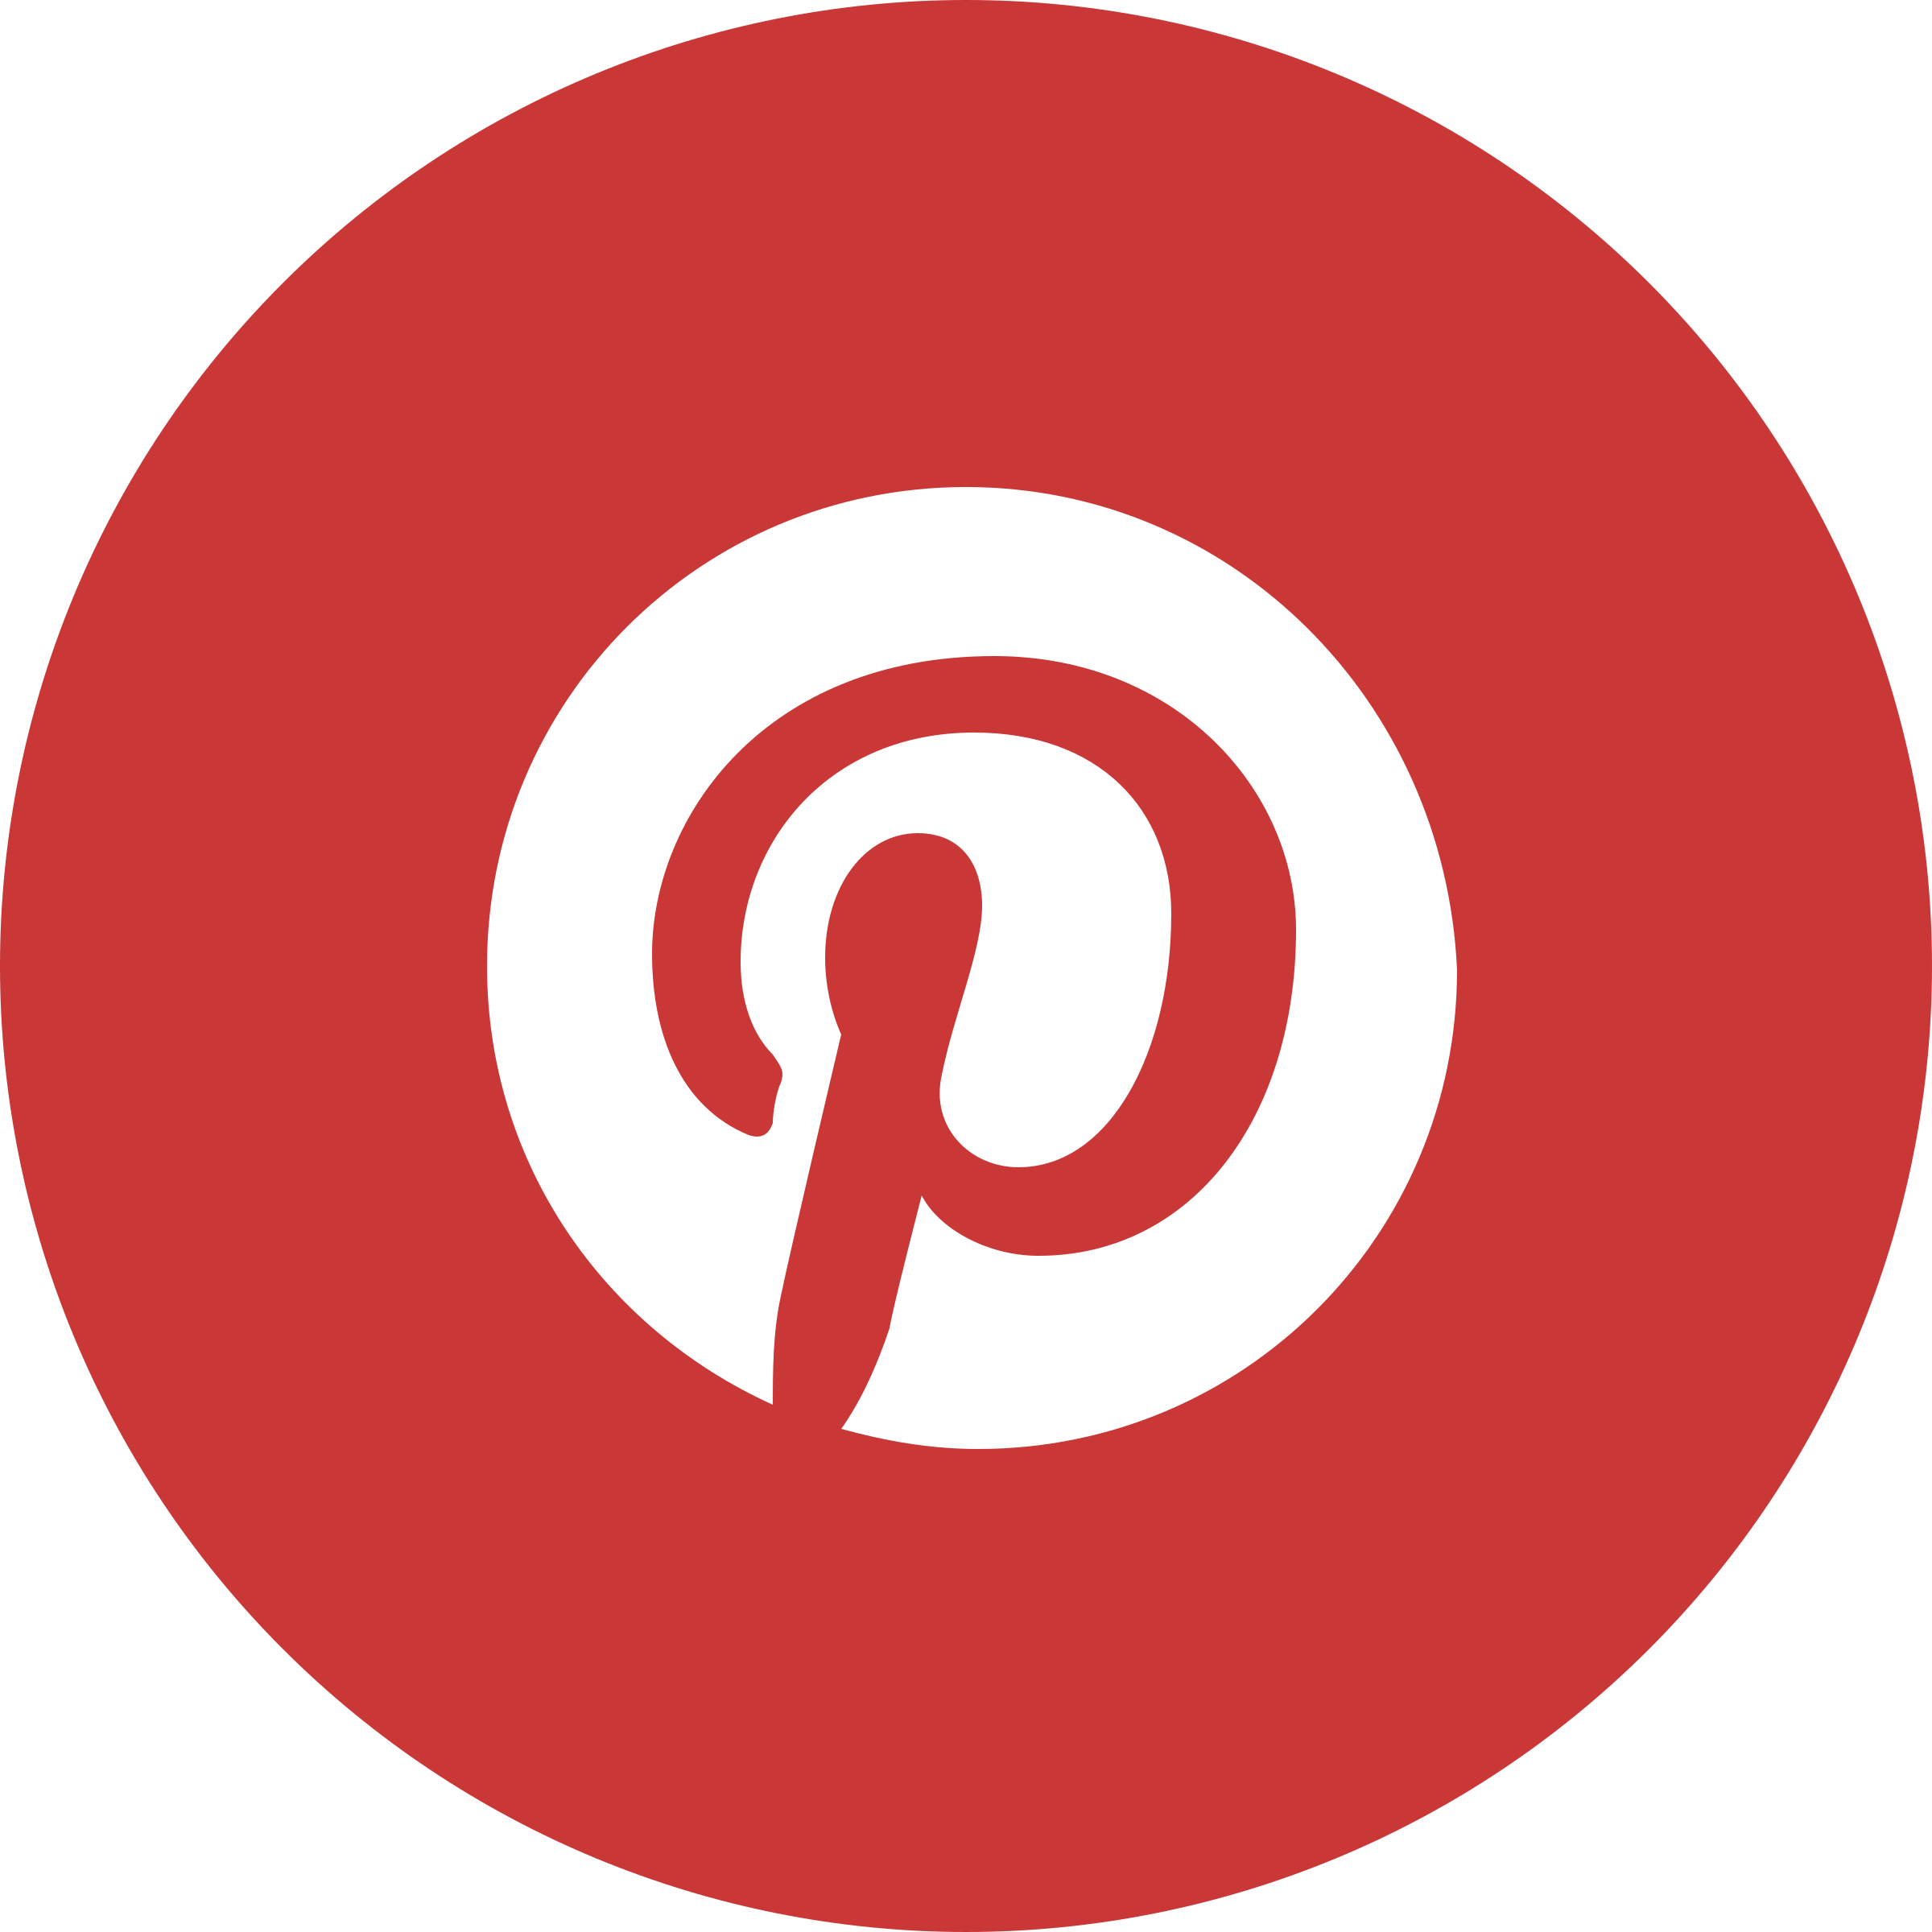 Pinterest Logo - Pinterest circle Logo PNG Transparent & SVG Vector - Freebie Supply